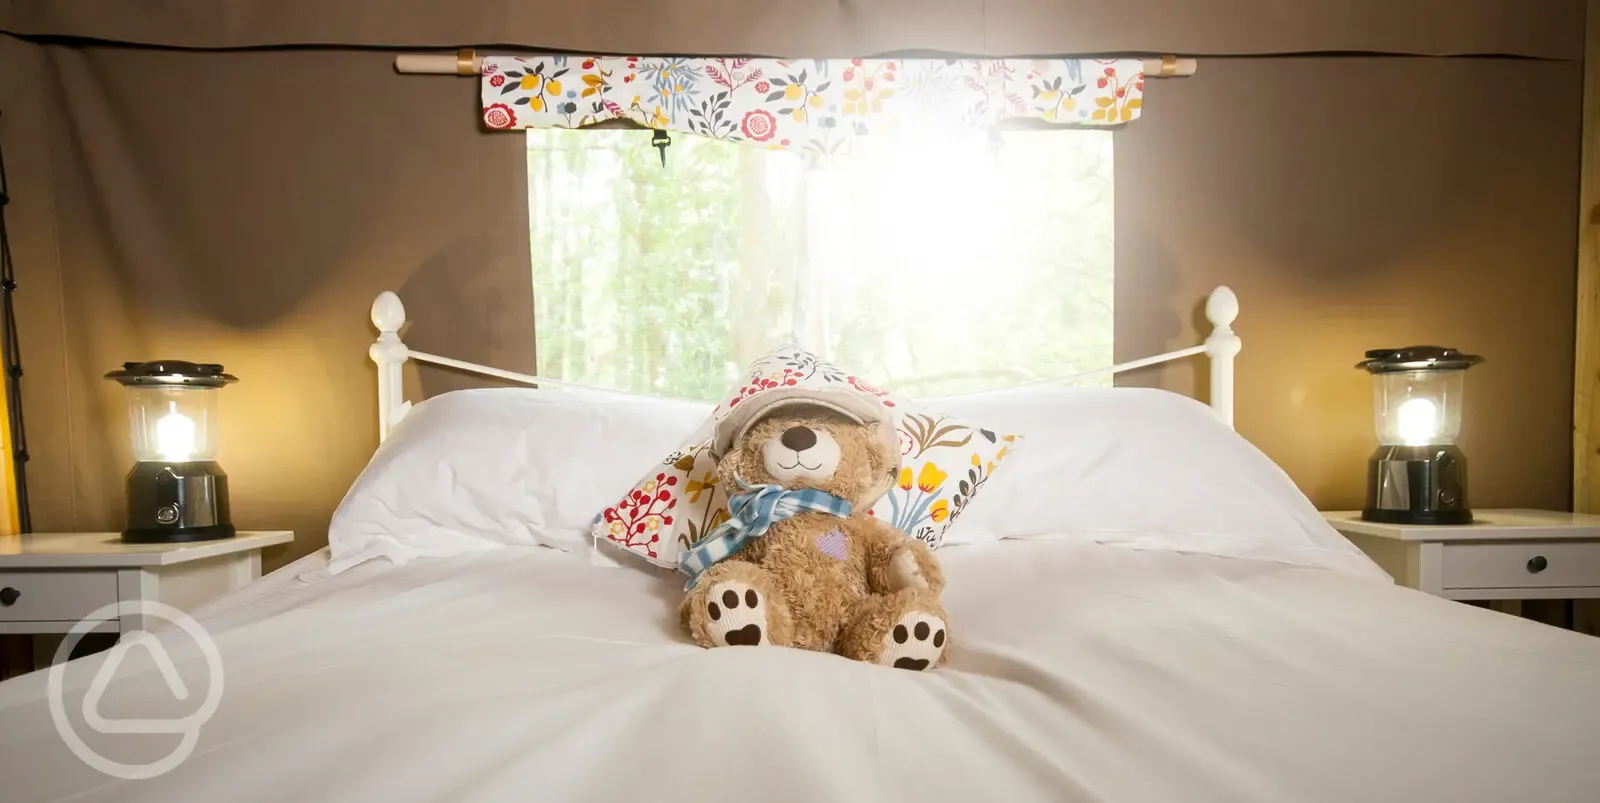 Bed with teddy at Felin Geri